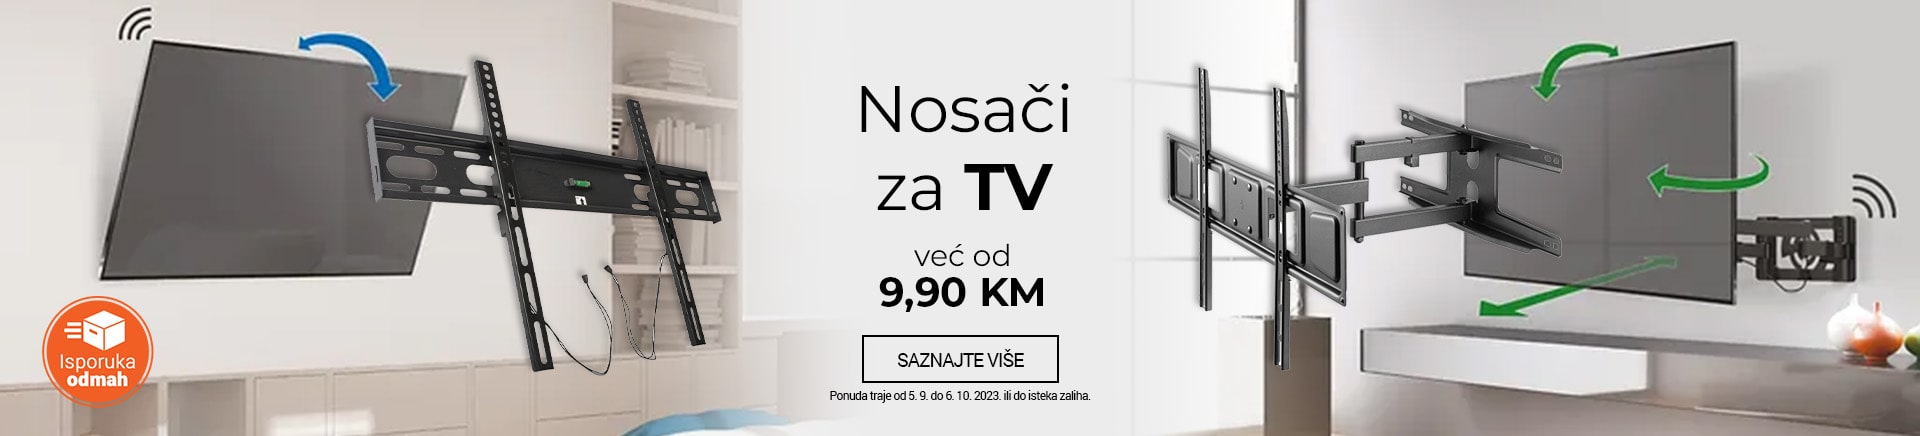 BA~Nosaci za TV MOBILE 380 X 436-min.jpg